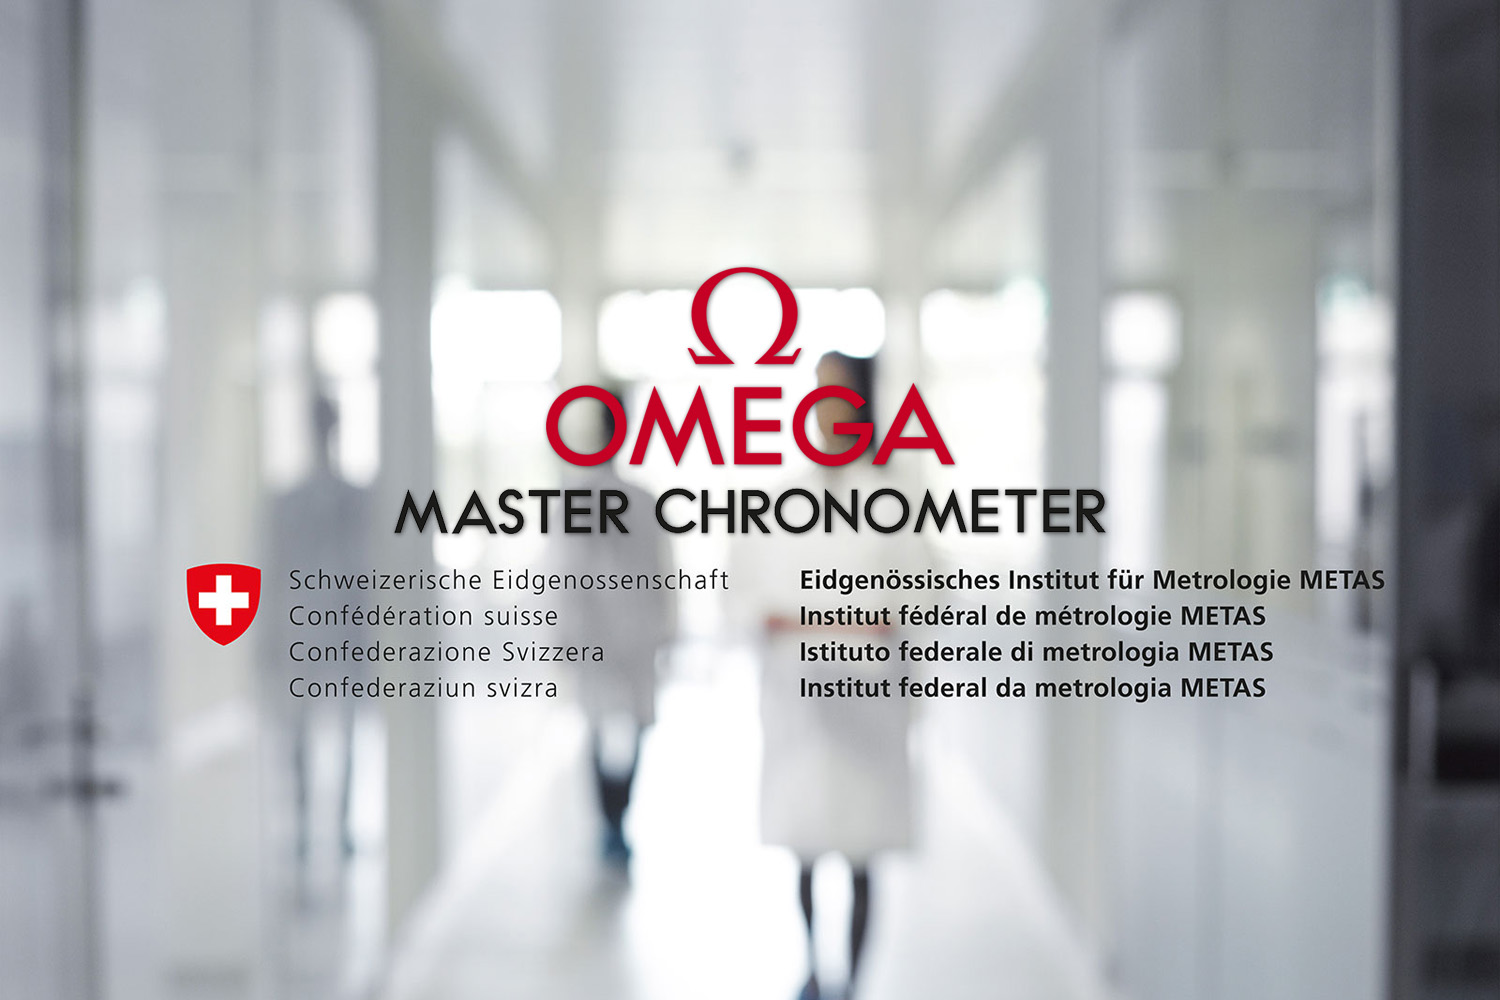 Inside Omega Master Chronometer METAS facilities